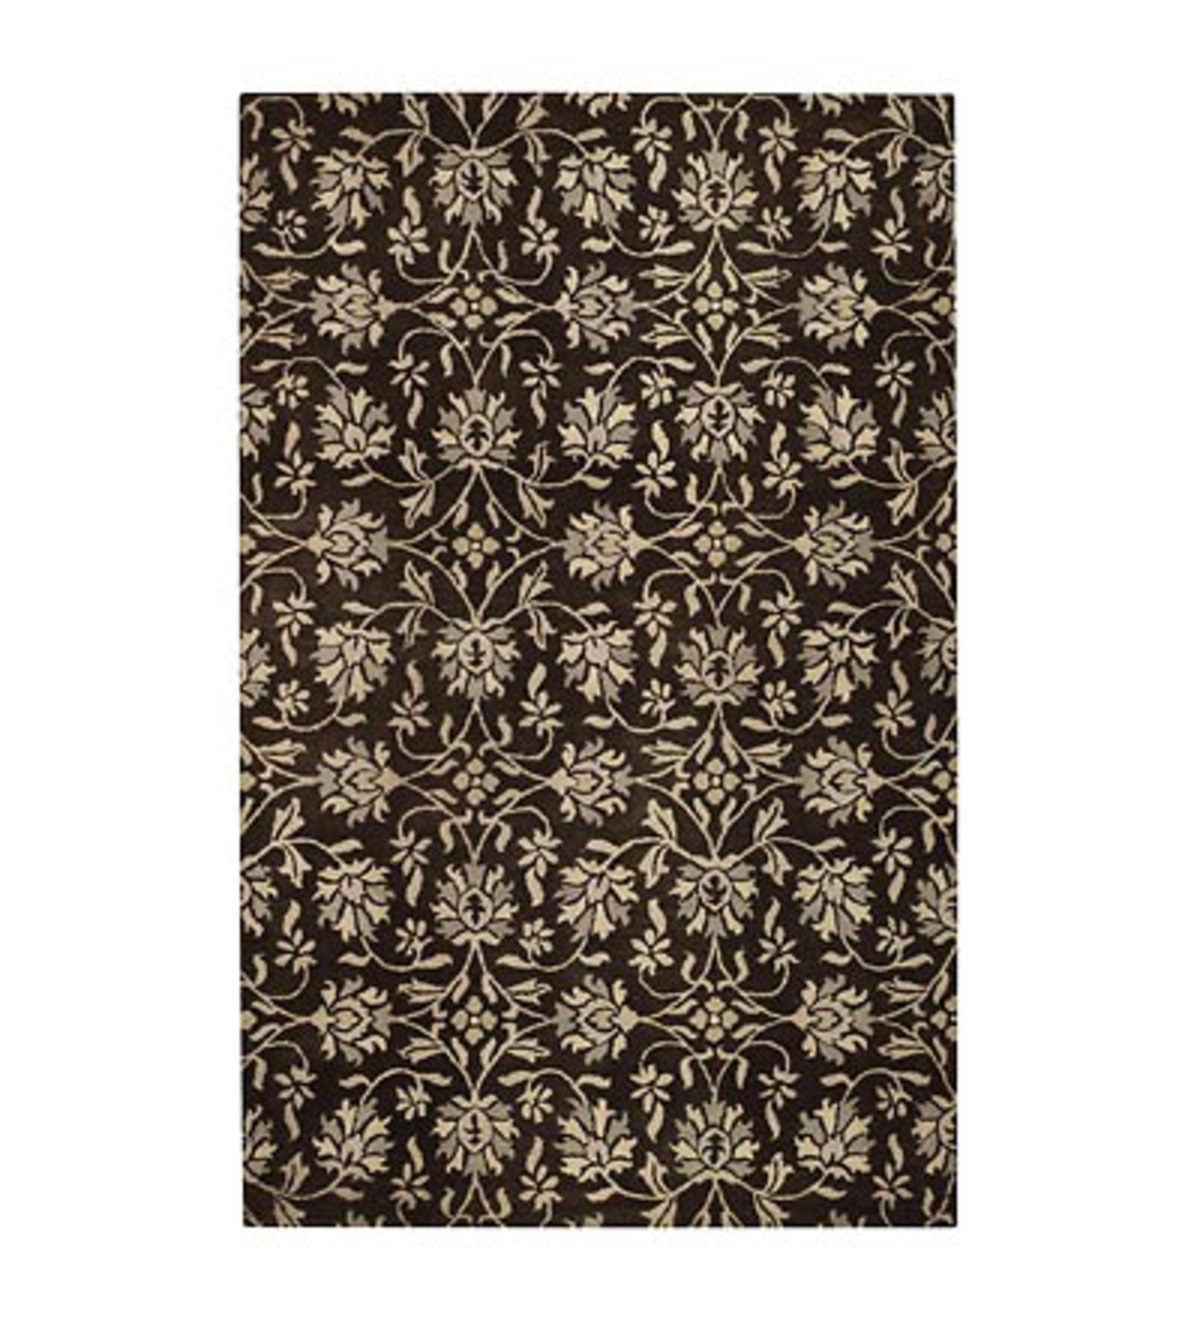 8' x 10' Charming Suzani Hand-Tufted Wool Area Rug - Charcoal